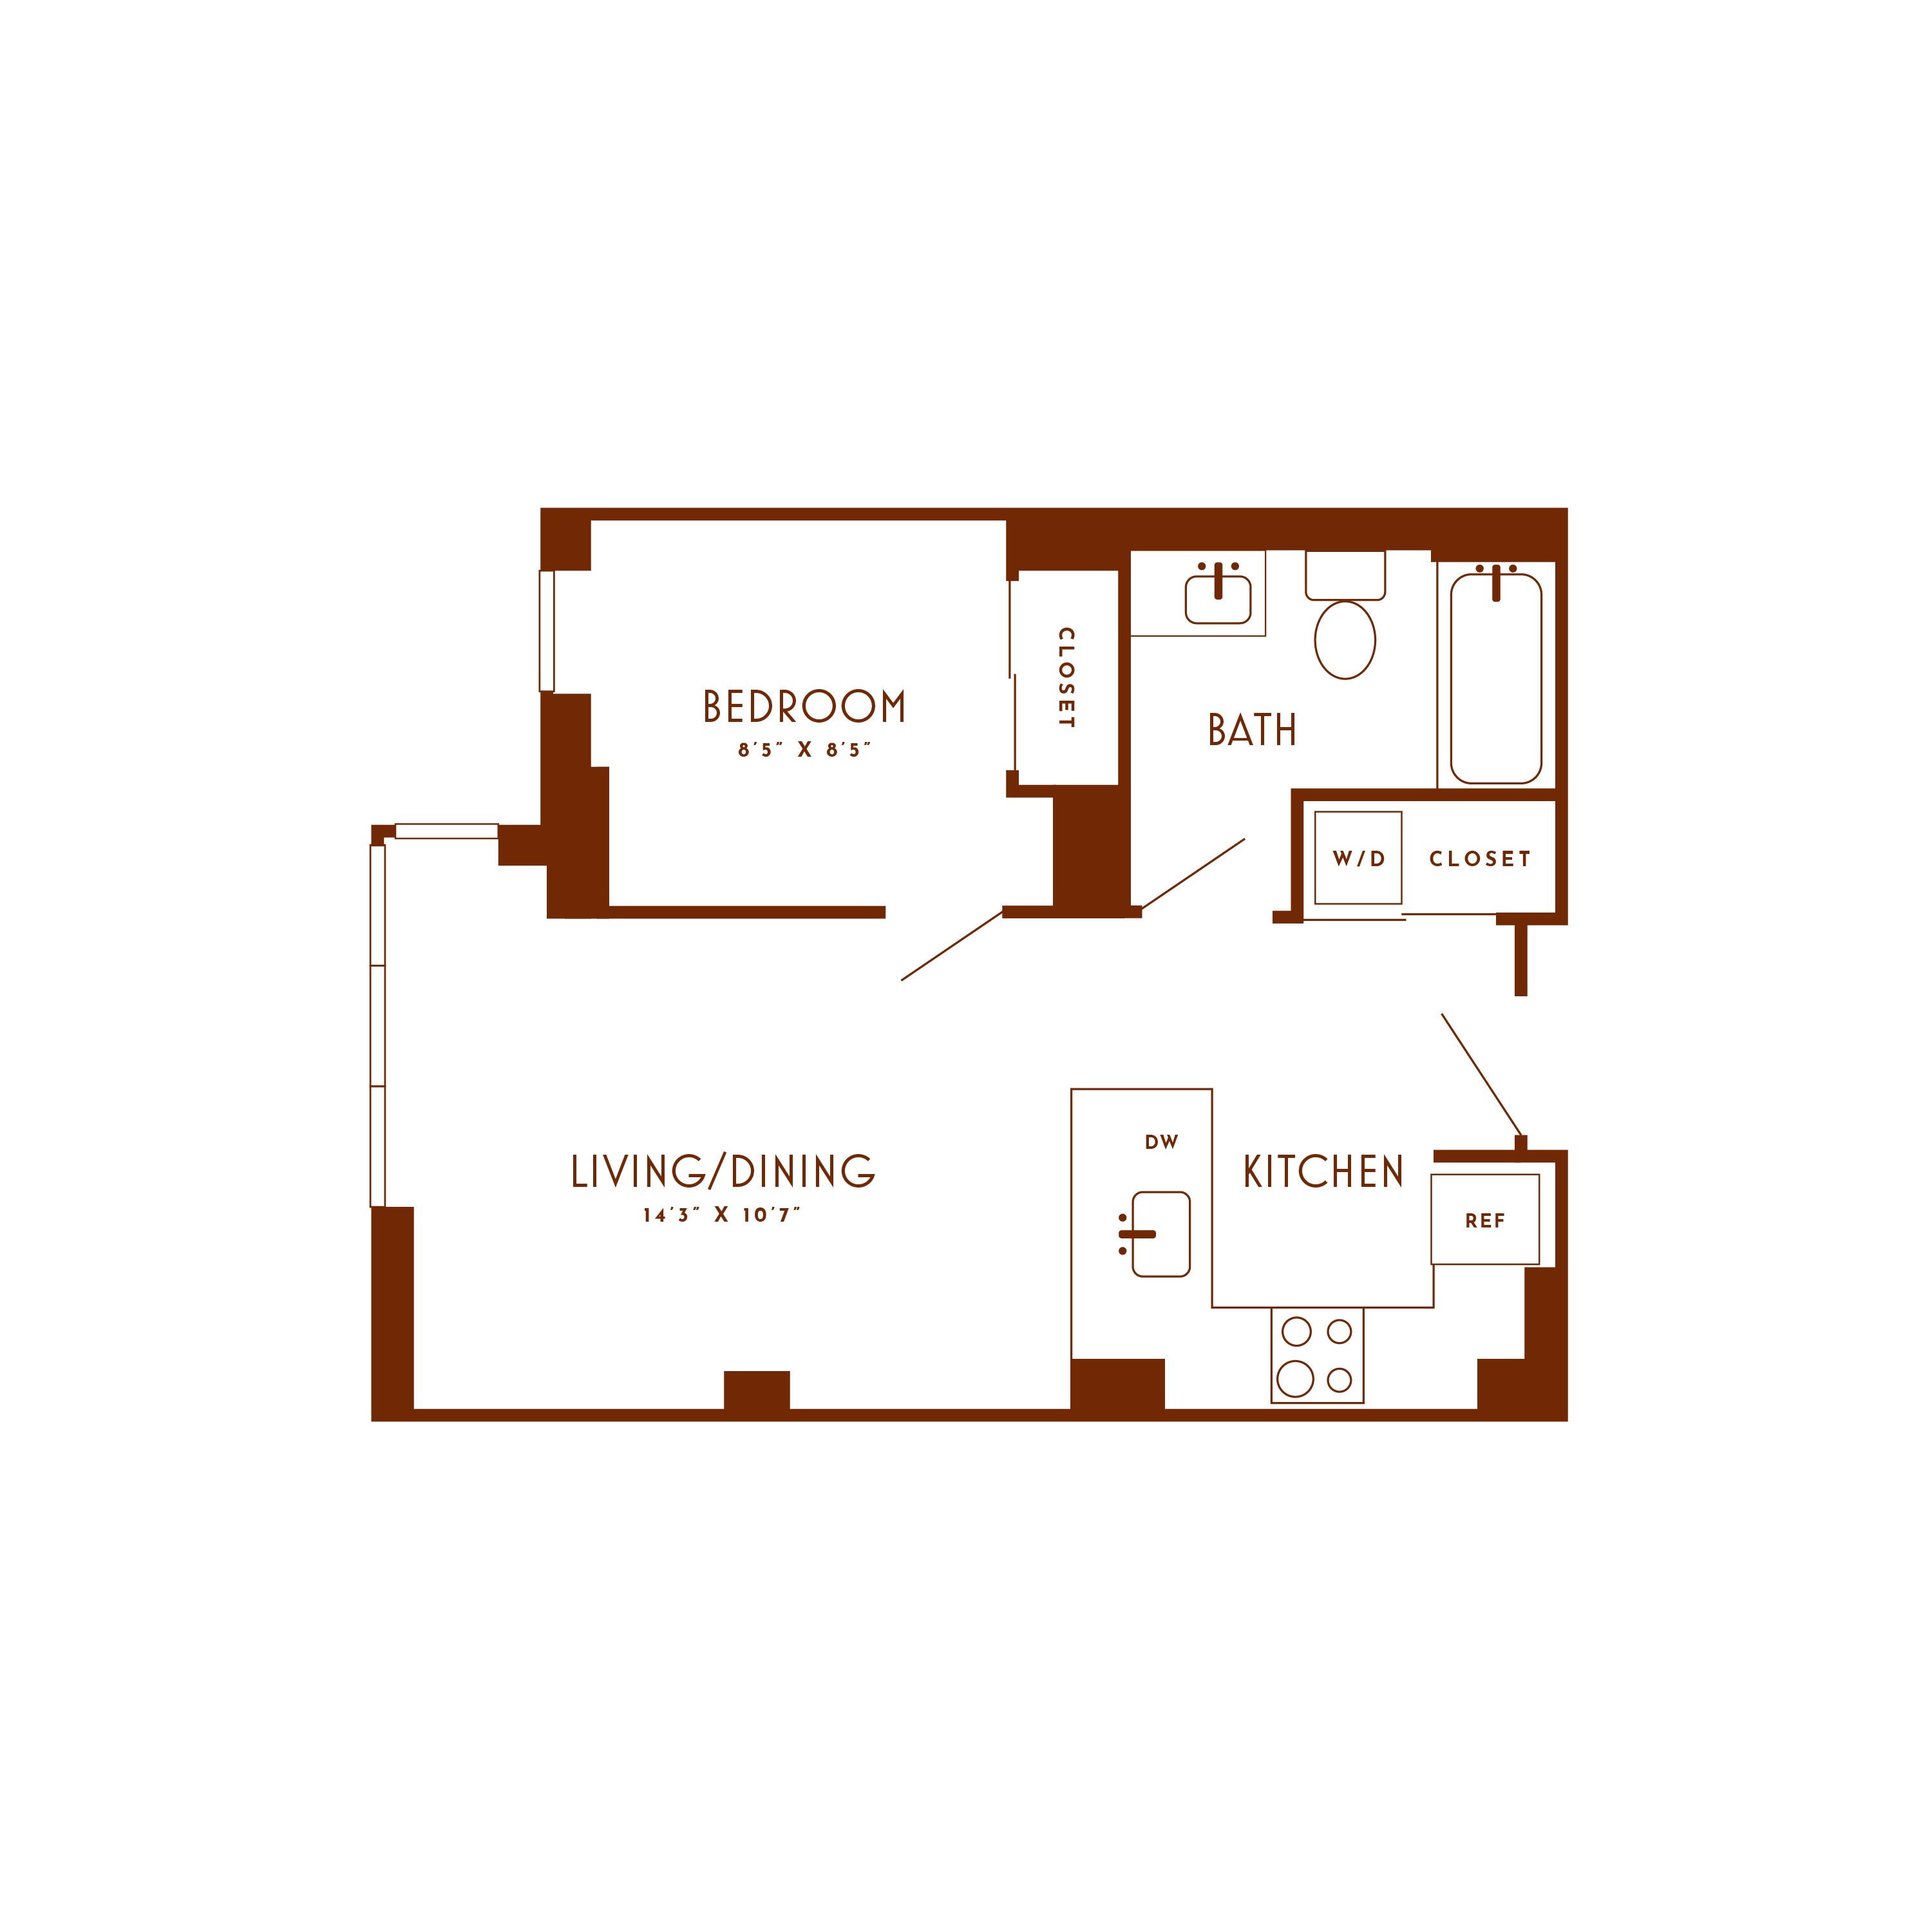 Floor plan image of unit 804